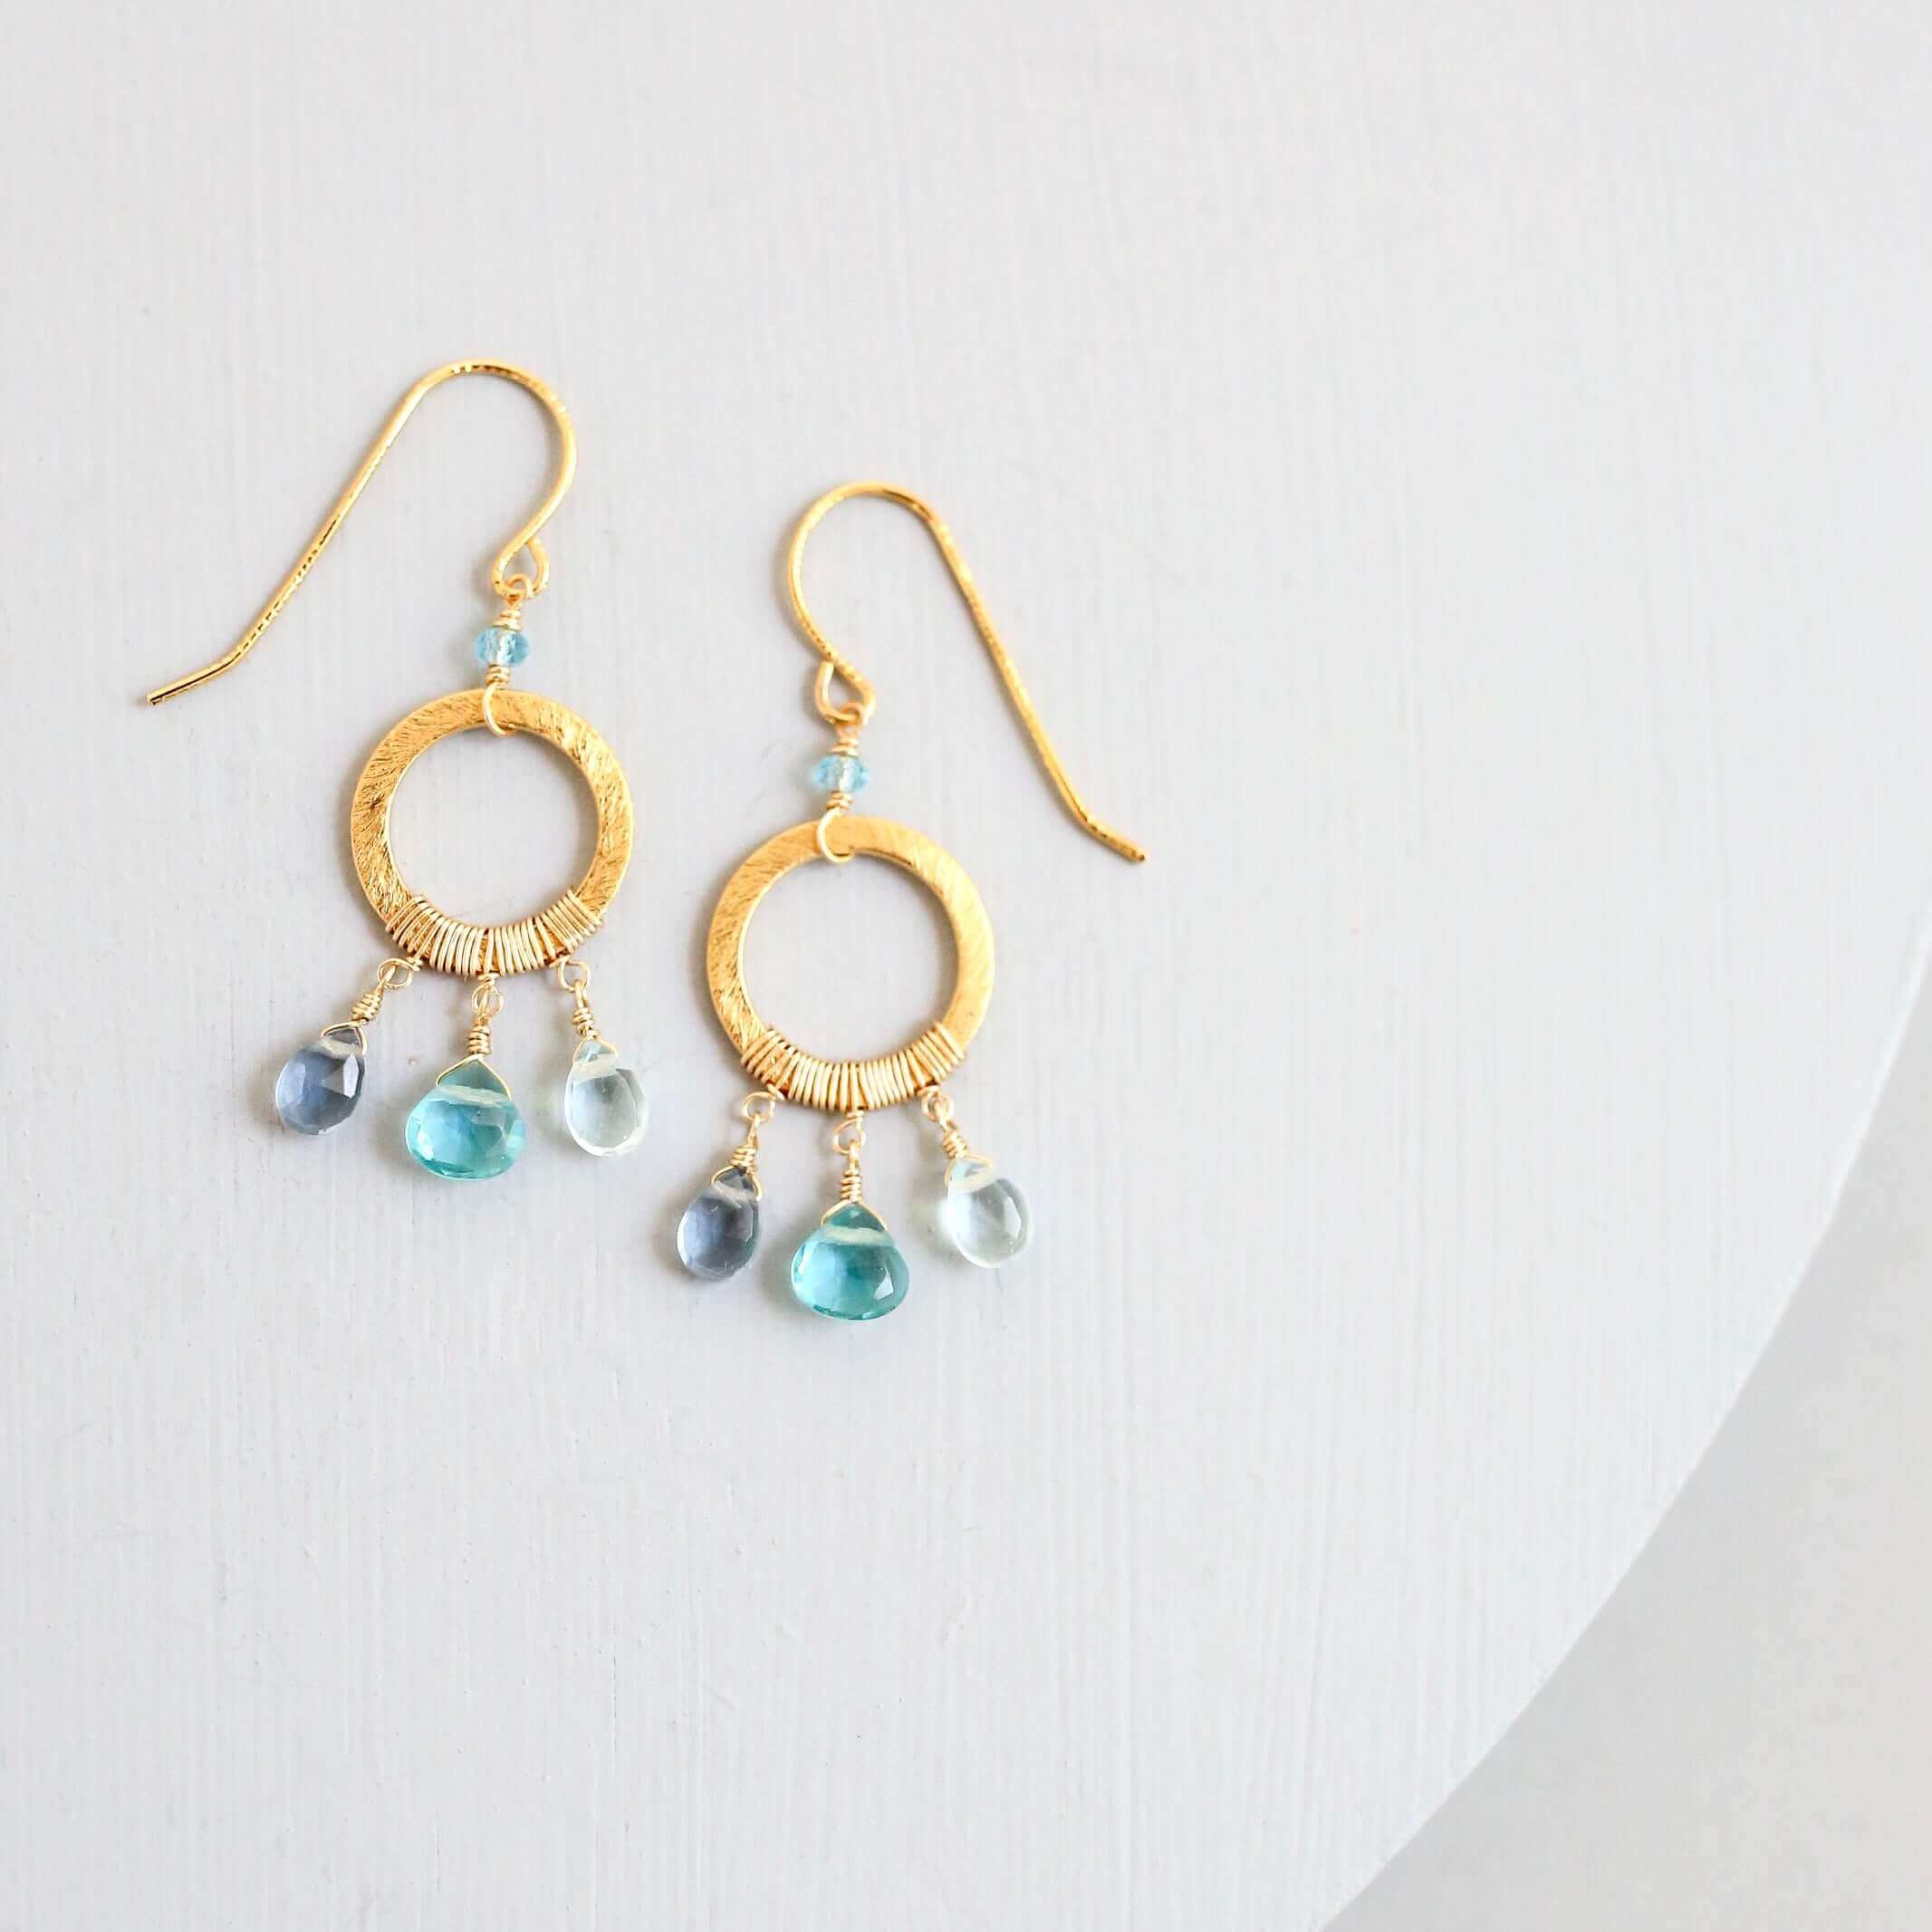 Boho Mini Dream Catcher Earrings with Aquamarine Gemstones